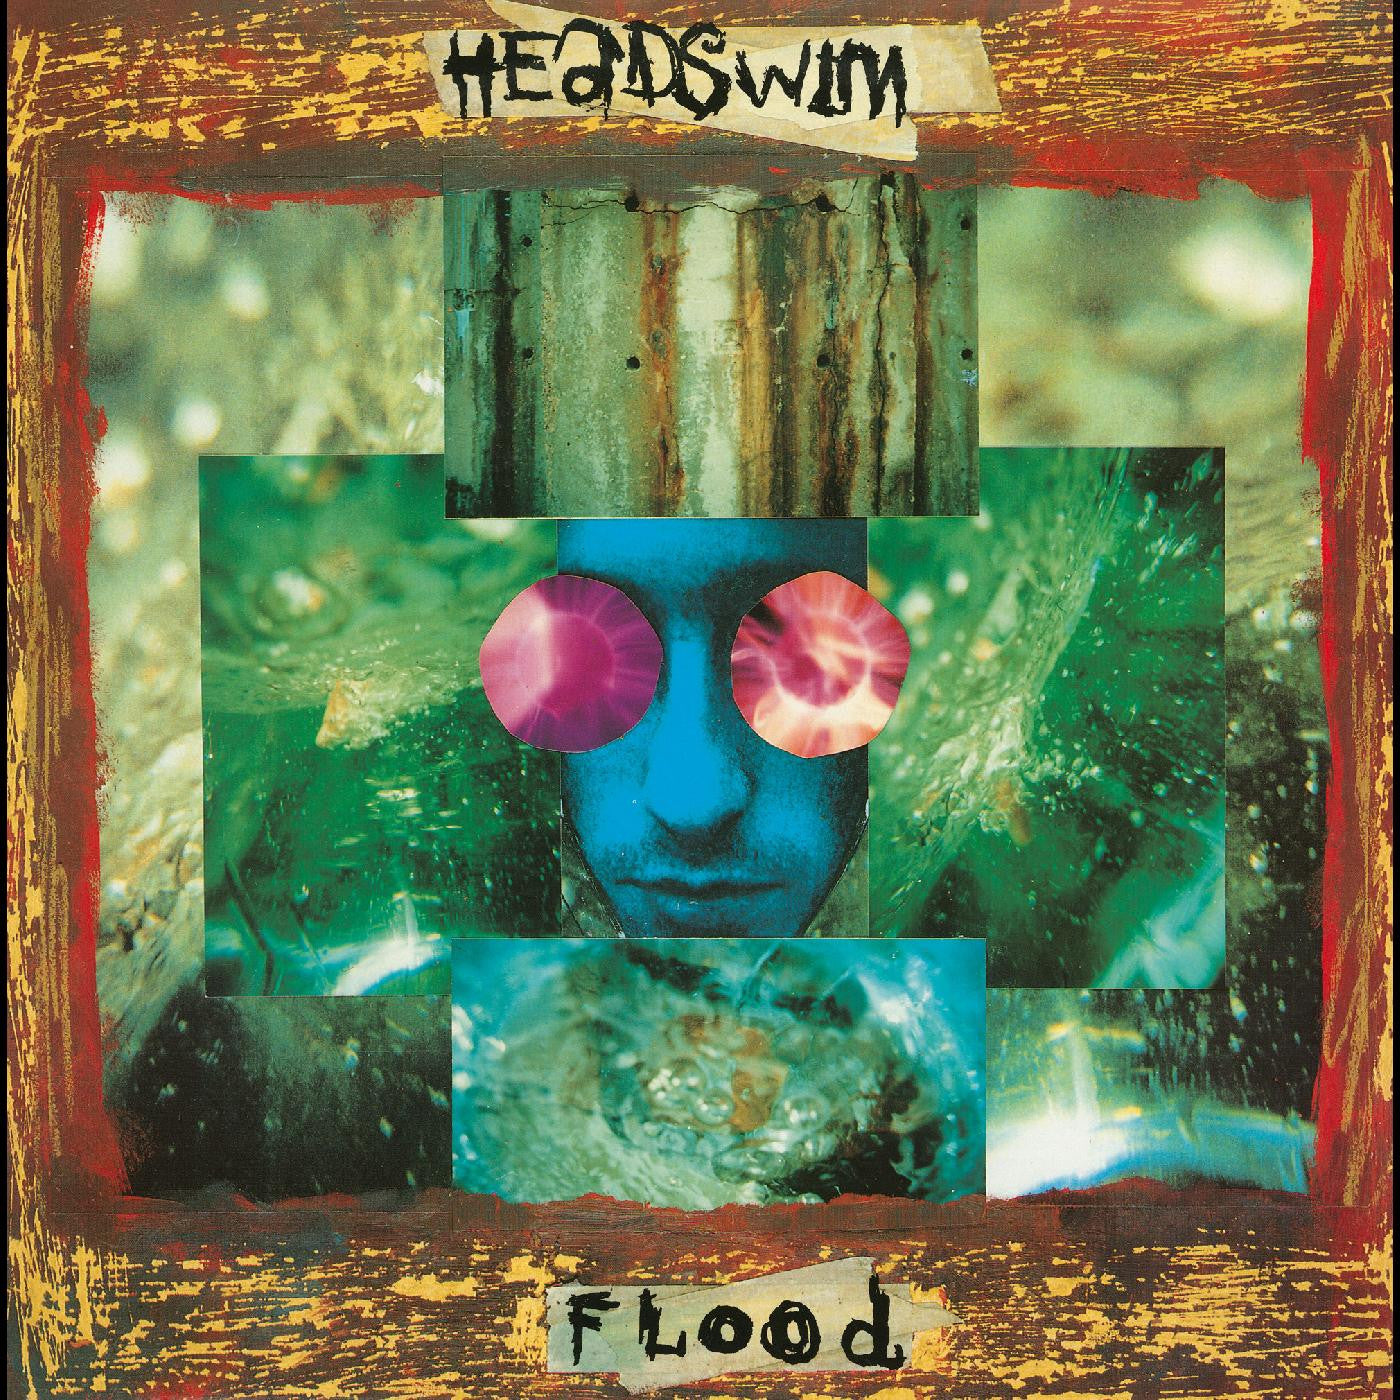 Headswim – Flood [PURPLE & YELLOW VINYL 2xLP IMPORT] - New LP